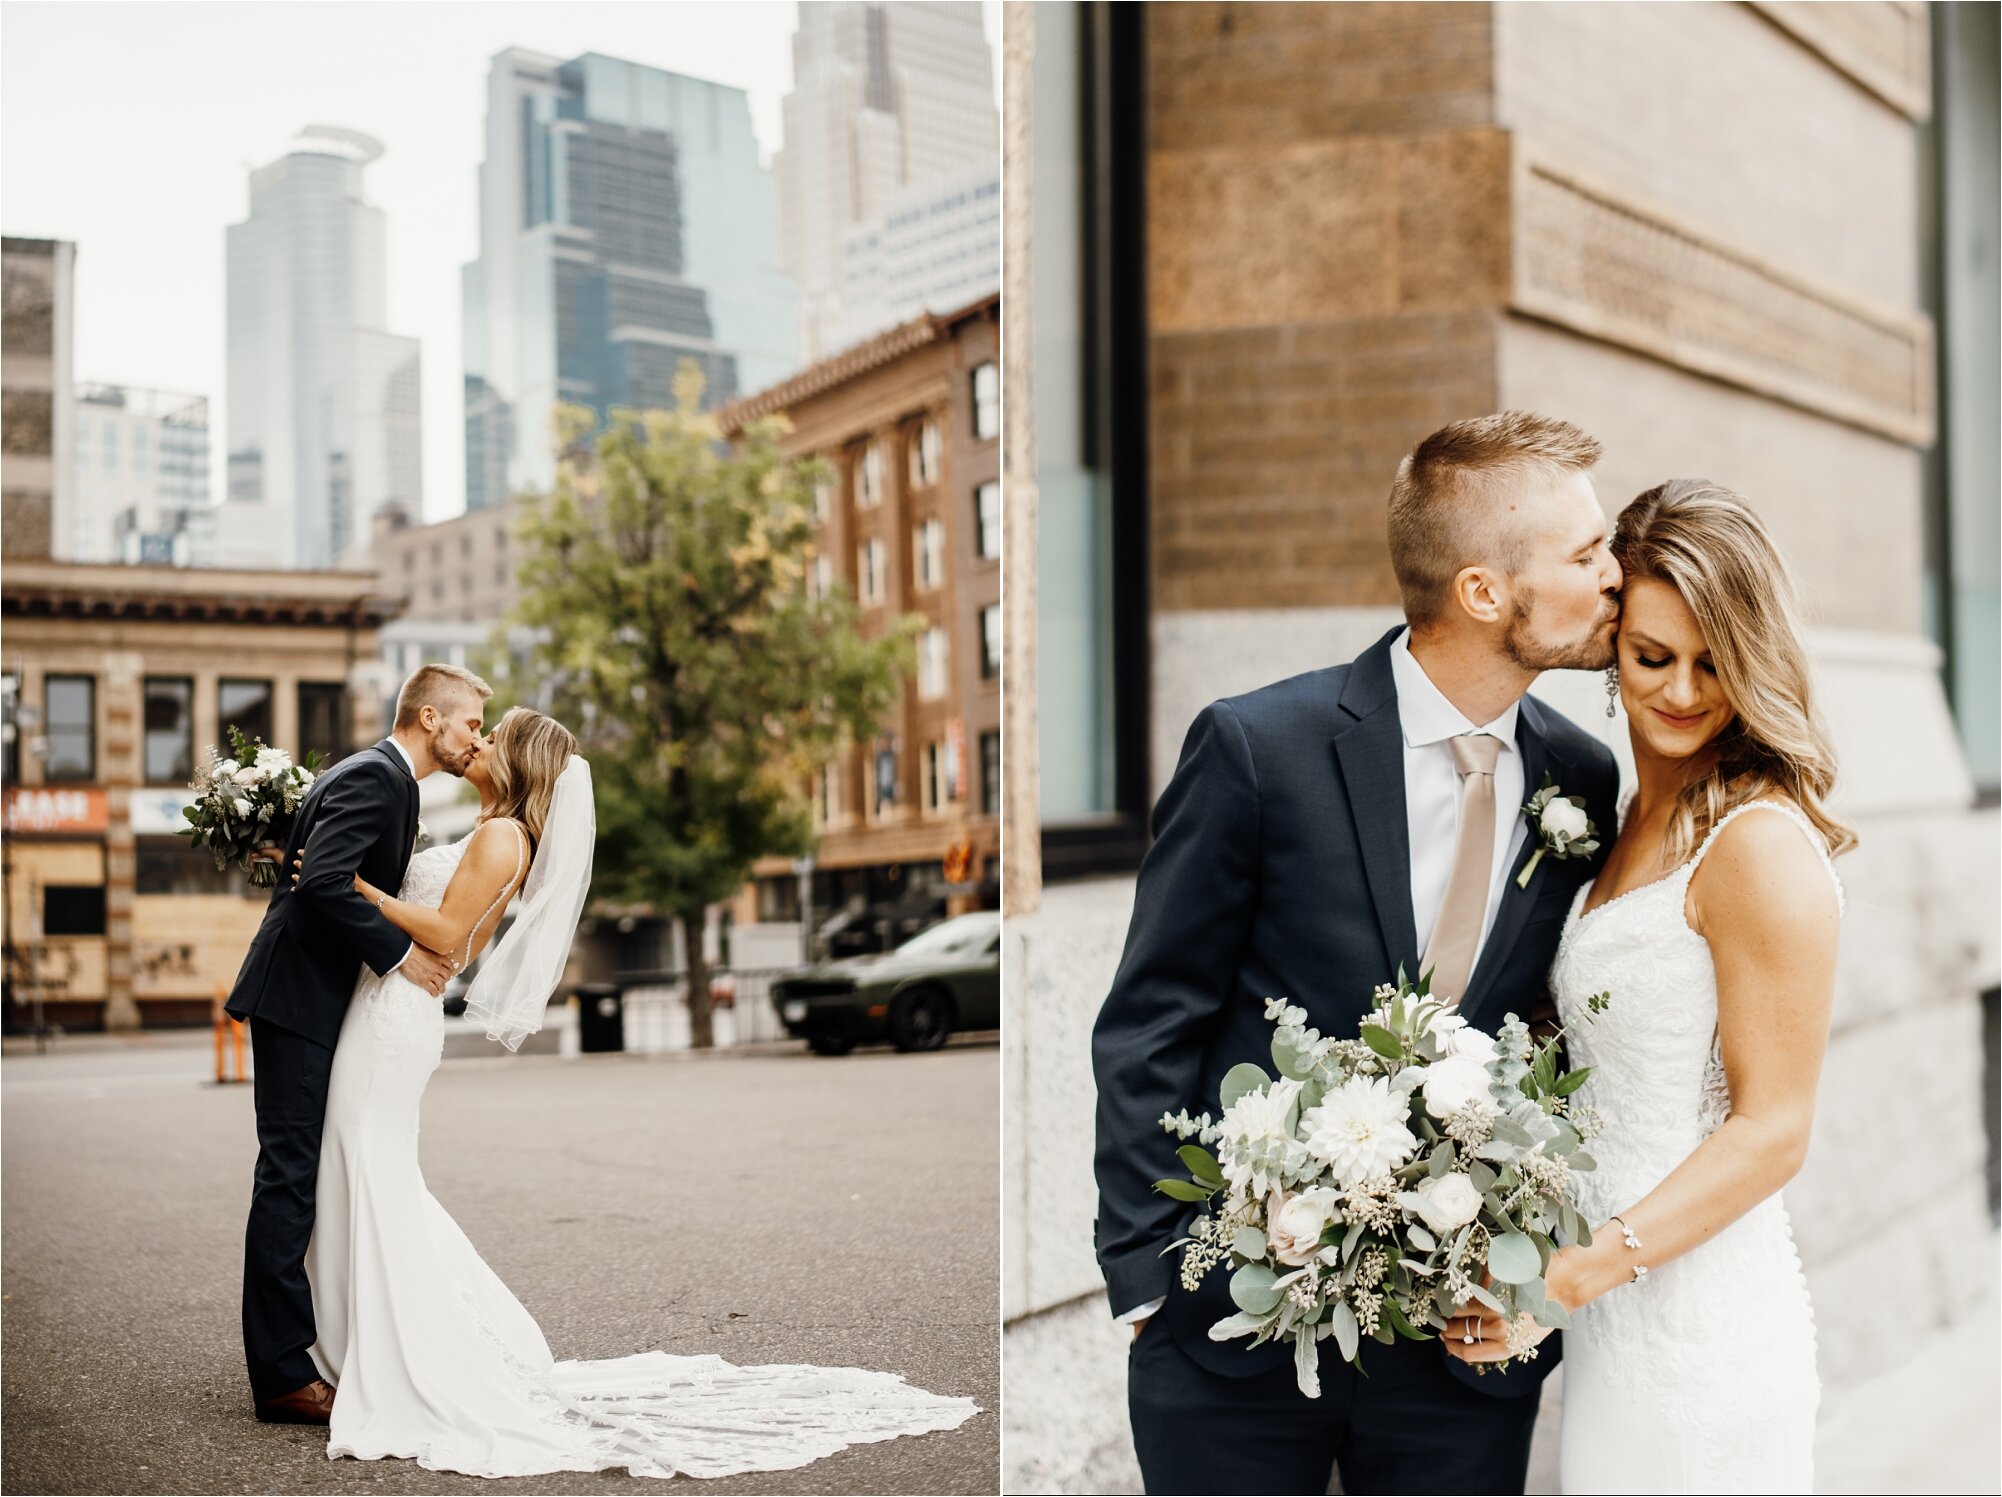  bride and groom kissing minneapolis minnesota parking lot city buildings wedding photos album 